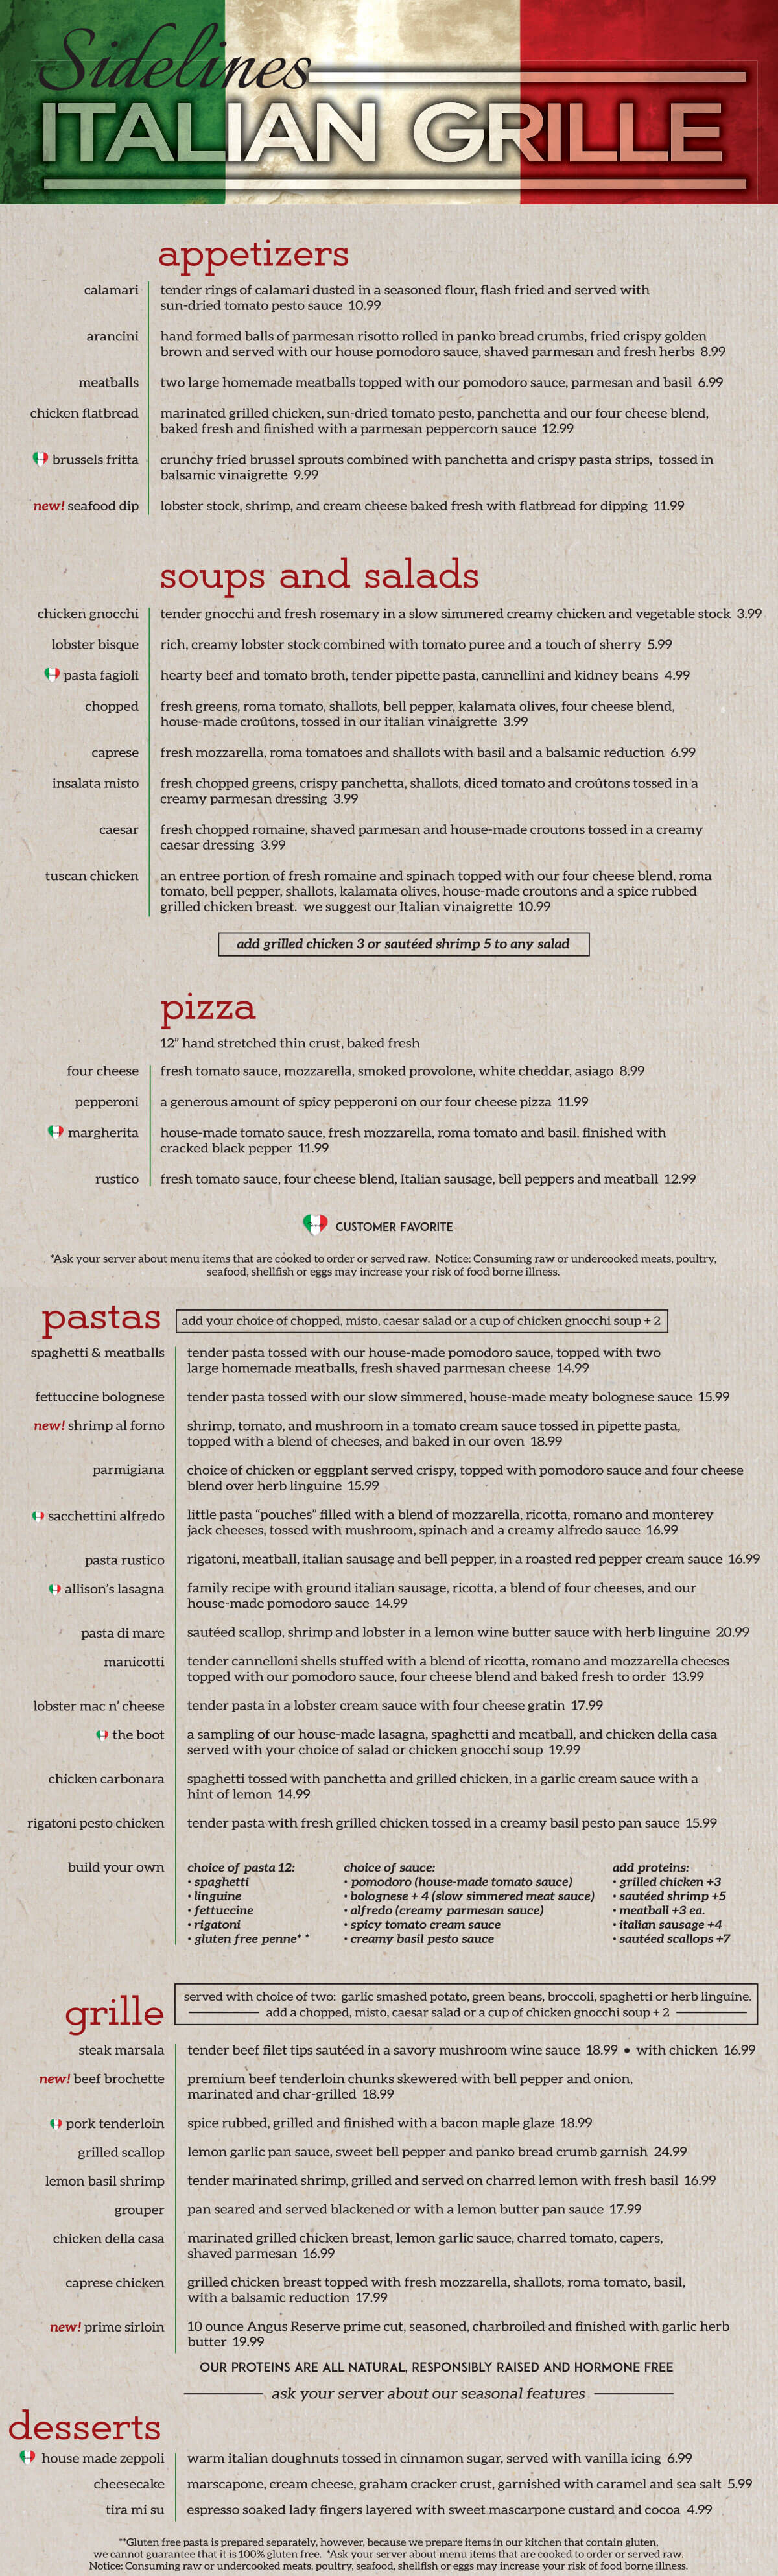 Sidelines Italian Grille menu